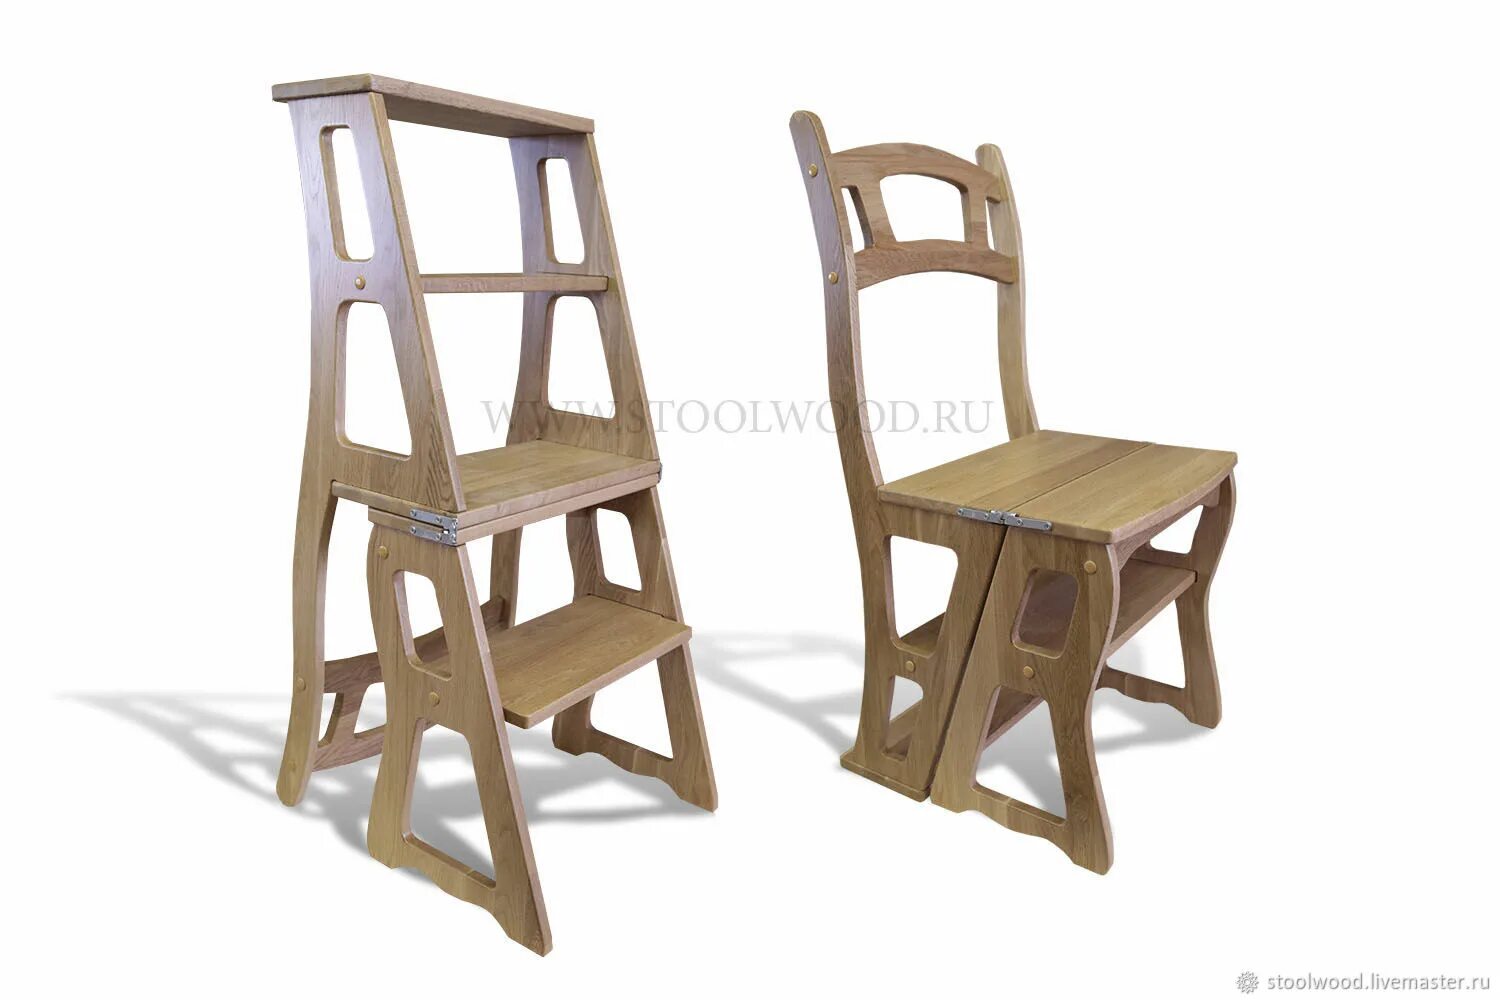 Стул лестница купить. Альтернатива м3945 табурет-стремянка. Стул стремянка Stepladder Chair. Стул-стремянка сс01 (трансформер). Адас стул стремянка MS-002 (43*50*83).